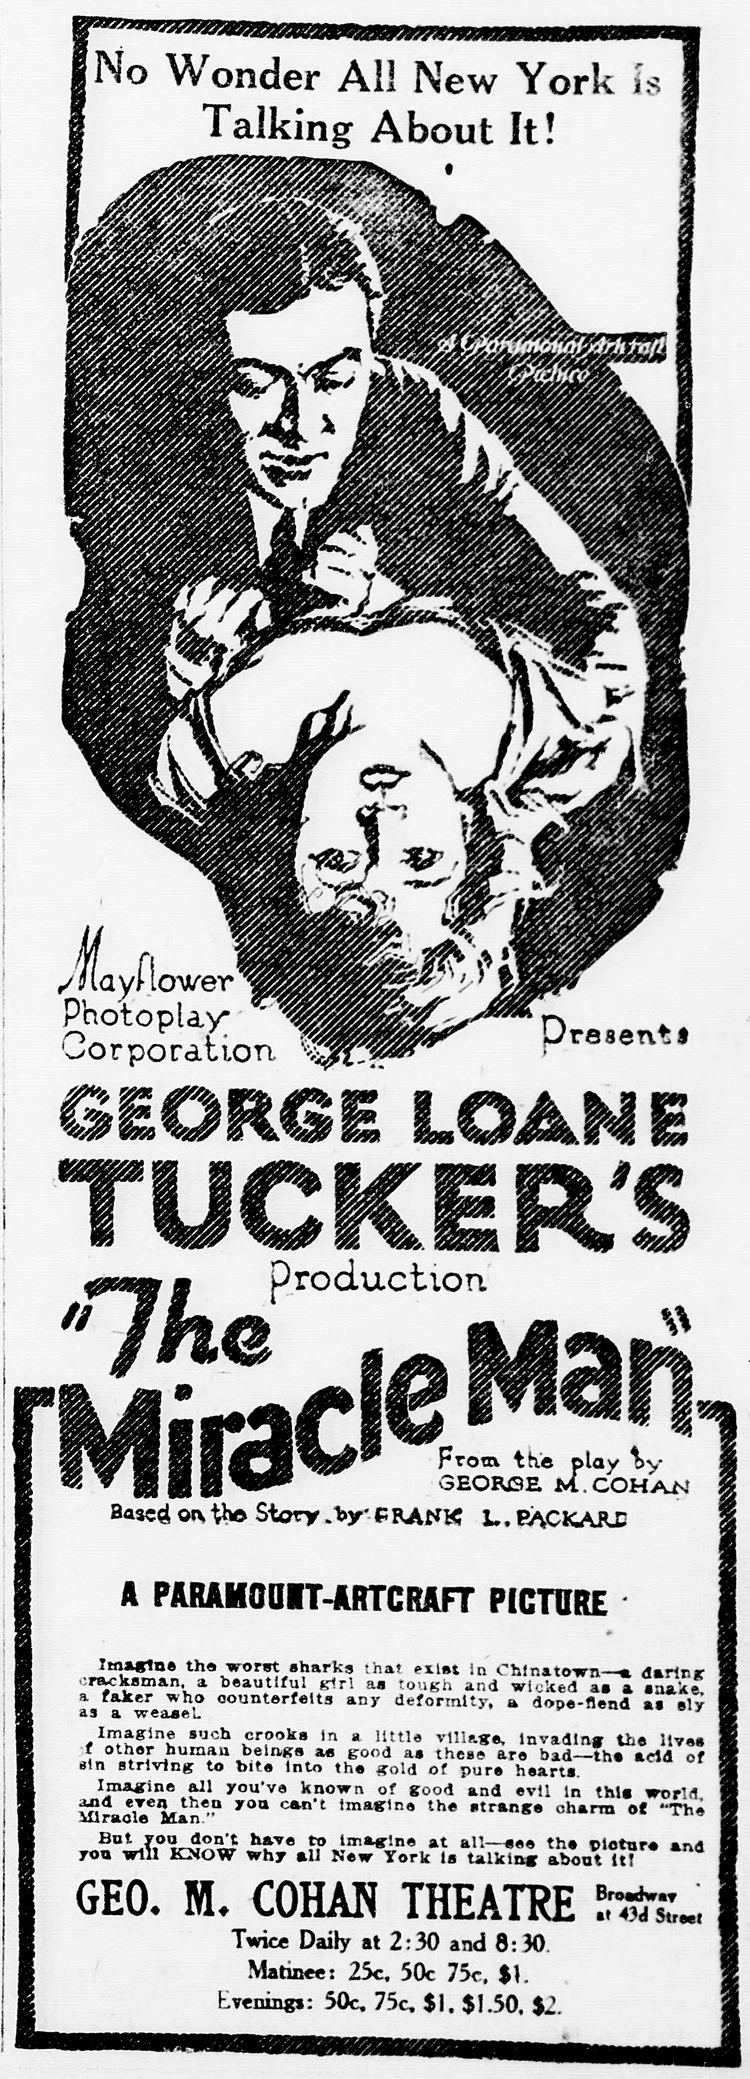 The Miracle Man (1919 film) FileThe Miracle Man 1919 newspaperadjpg Wikimedia Commons